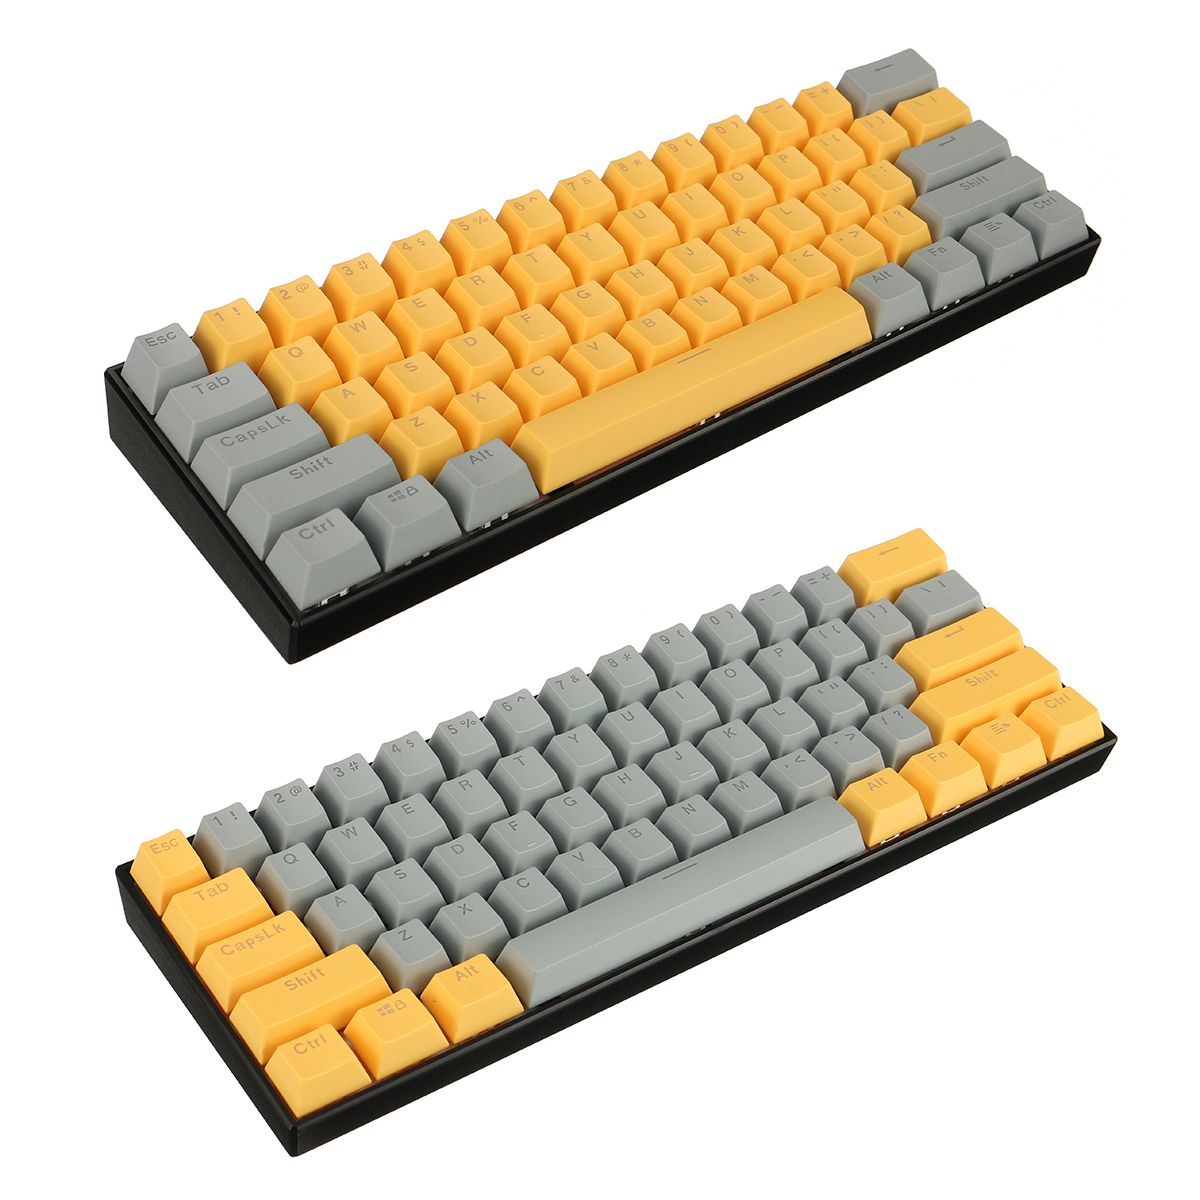 111-Keys-OrangeGrey-Keycap-Set-OEM-Profile-ABS-Keycaps-for-Mechanical-Keyboard-1745958